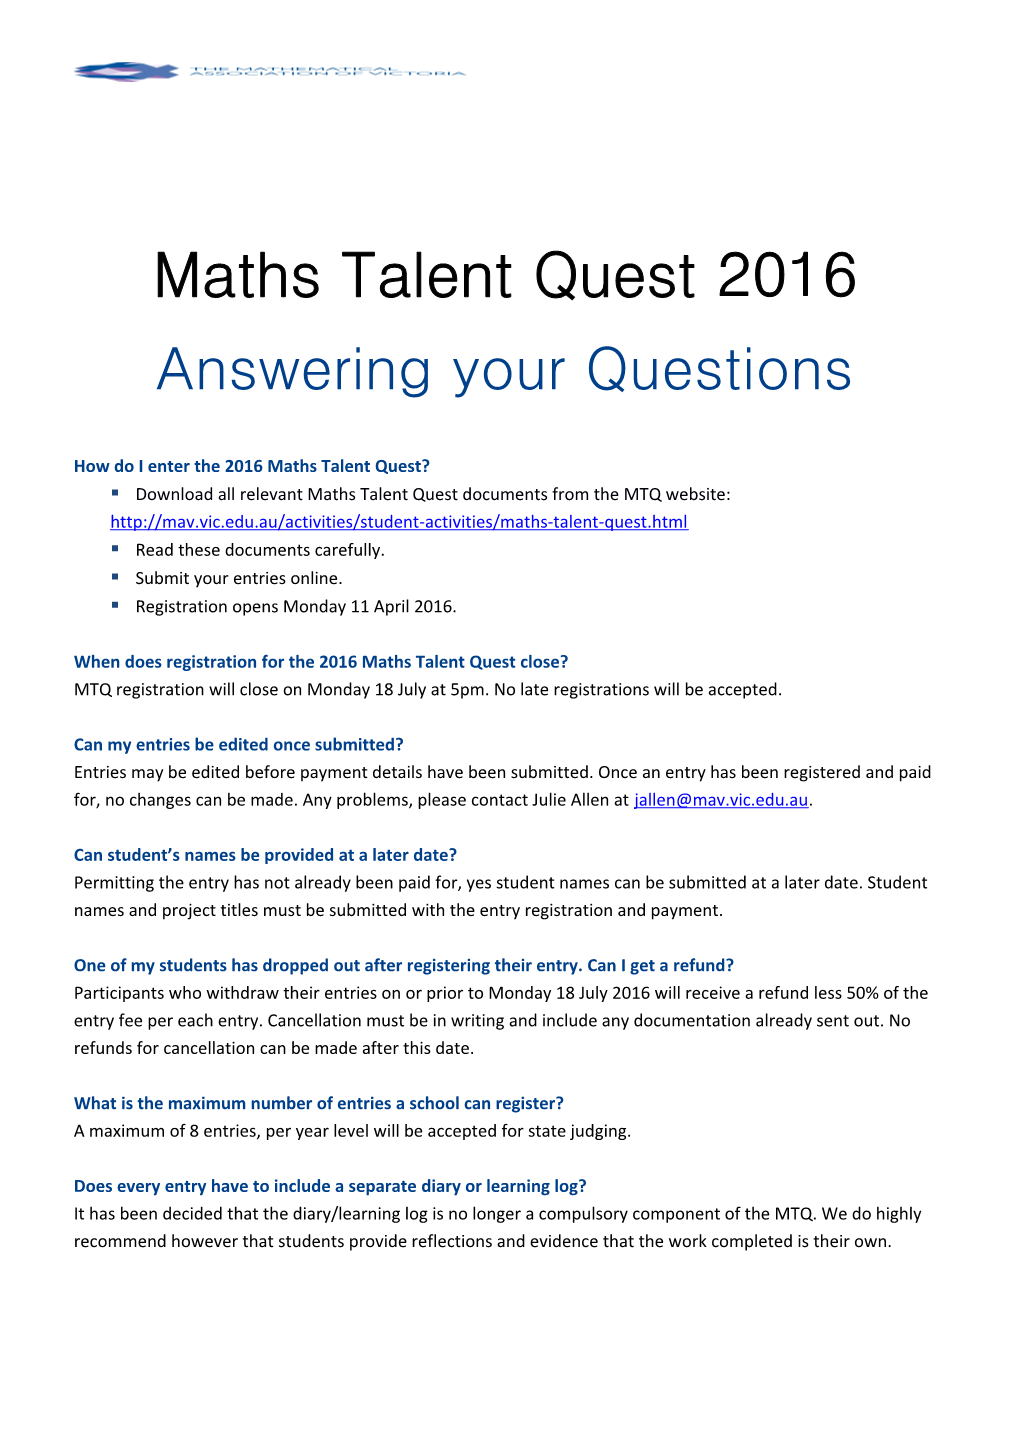 How Do I Enter the 2016 Maths Talent Quest?